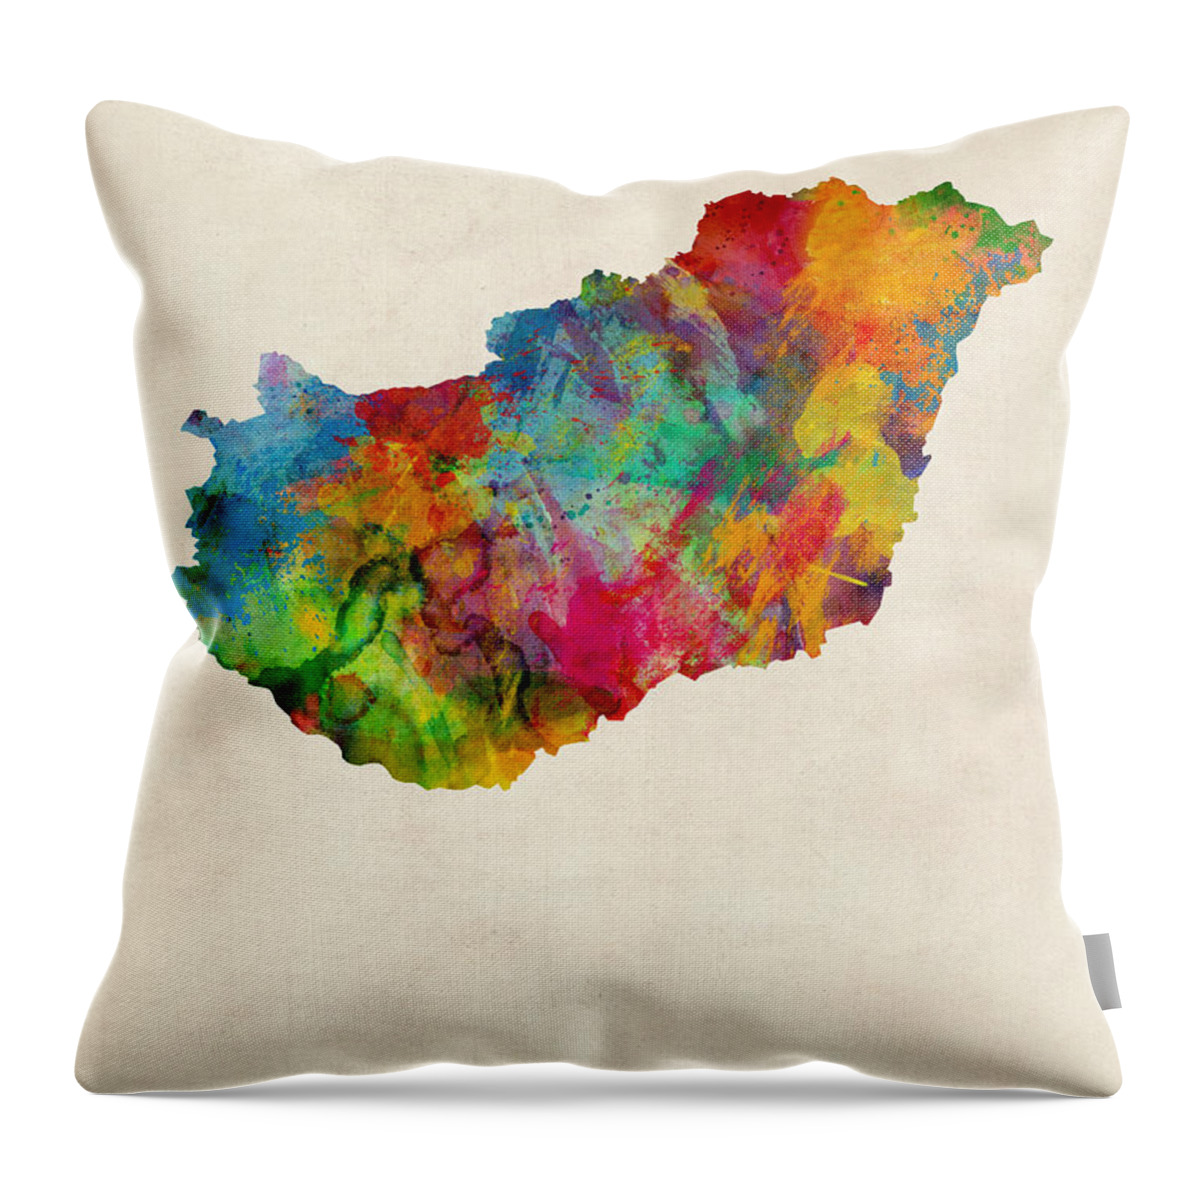 Map Art Throw Pillow featuring the digital art Hungary Watercolor Map by Michael Tompsett